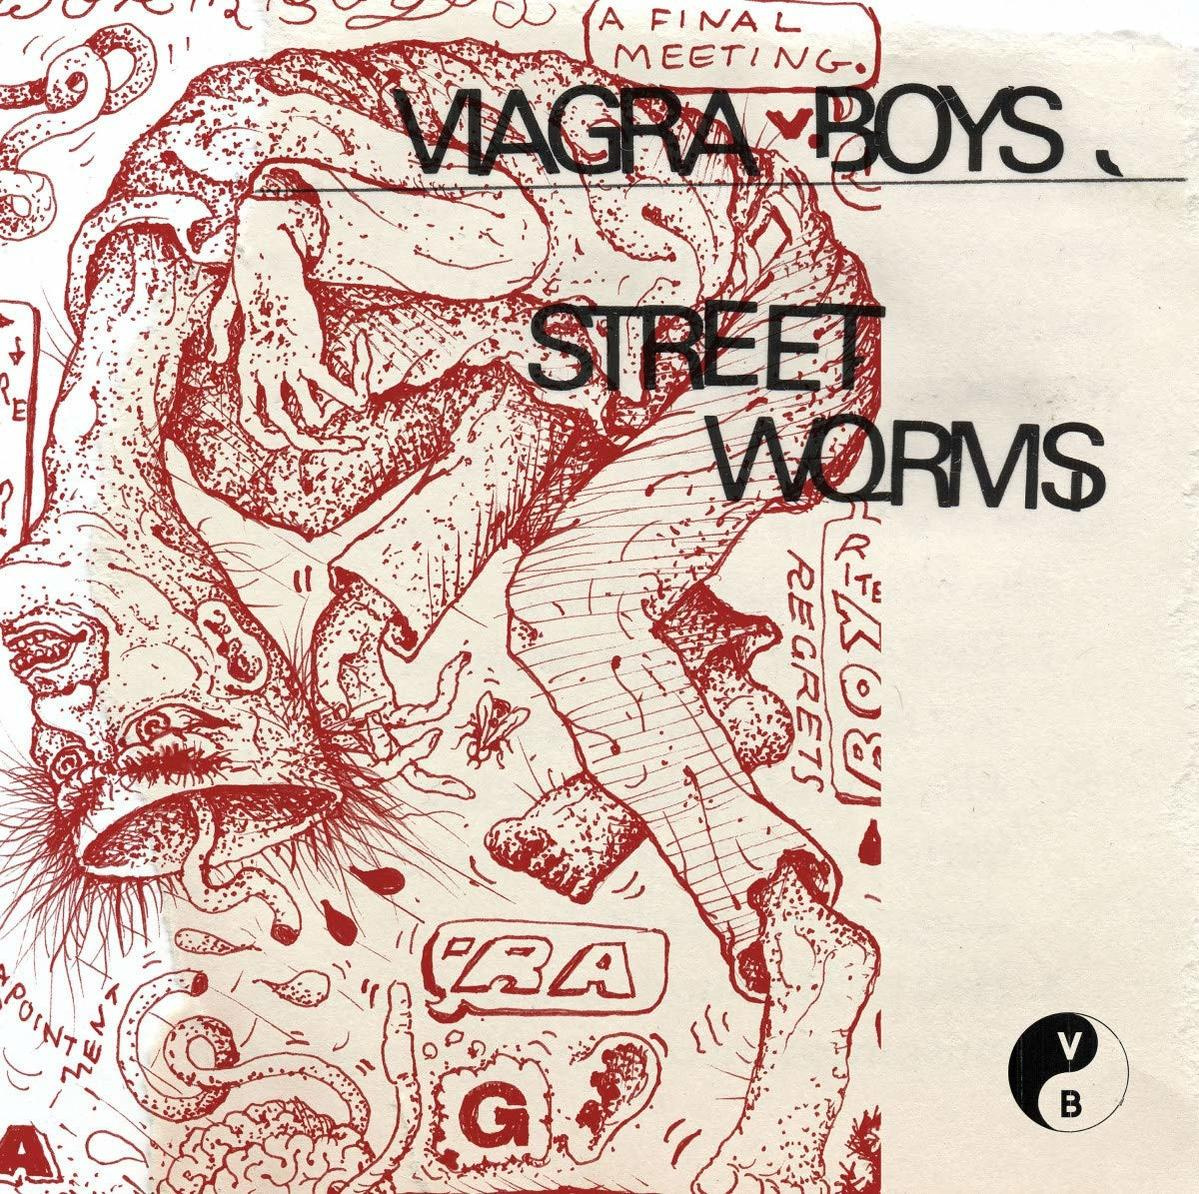 Viagra Boys - Street (Vinyl) Worms 